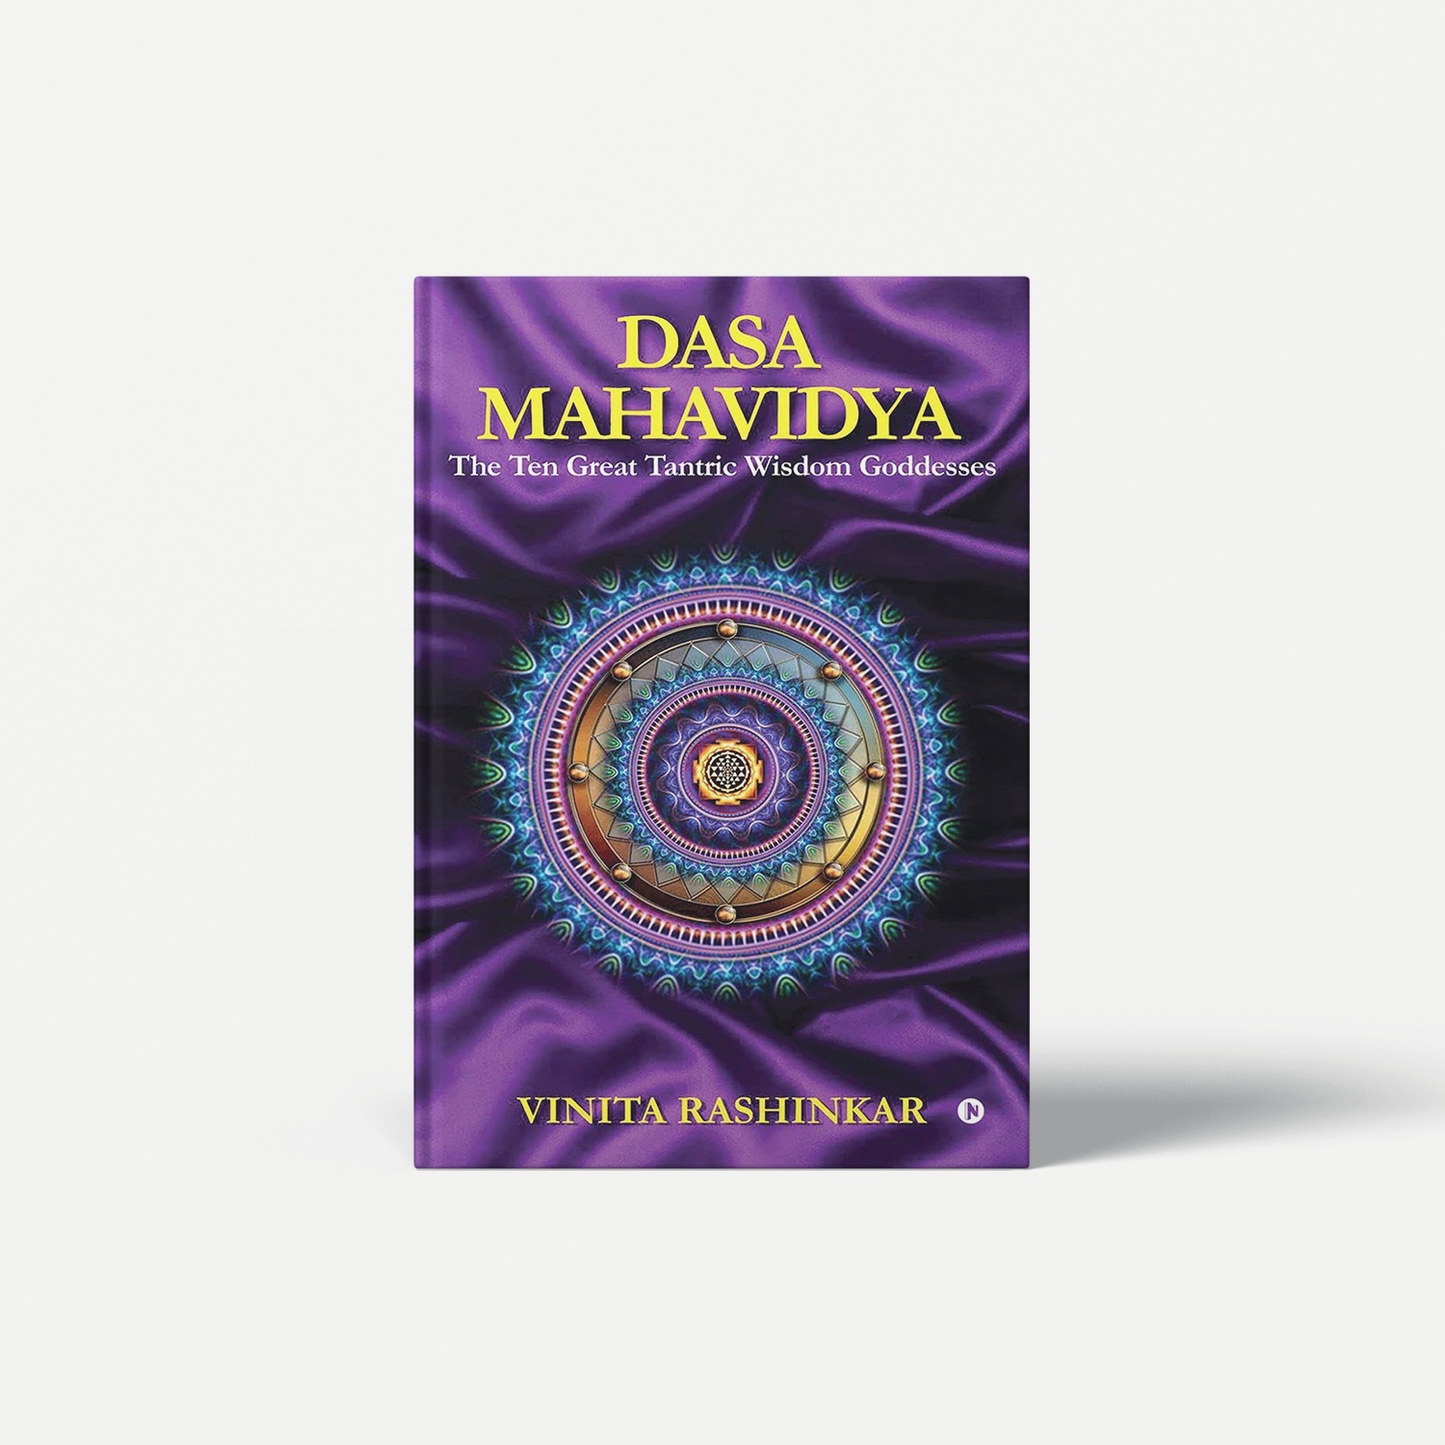 Dasa Mahavidya - The Ten Great Tantric Wisdom Goddesses